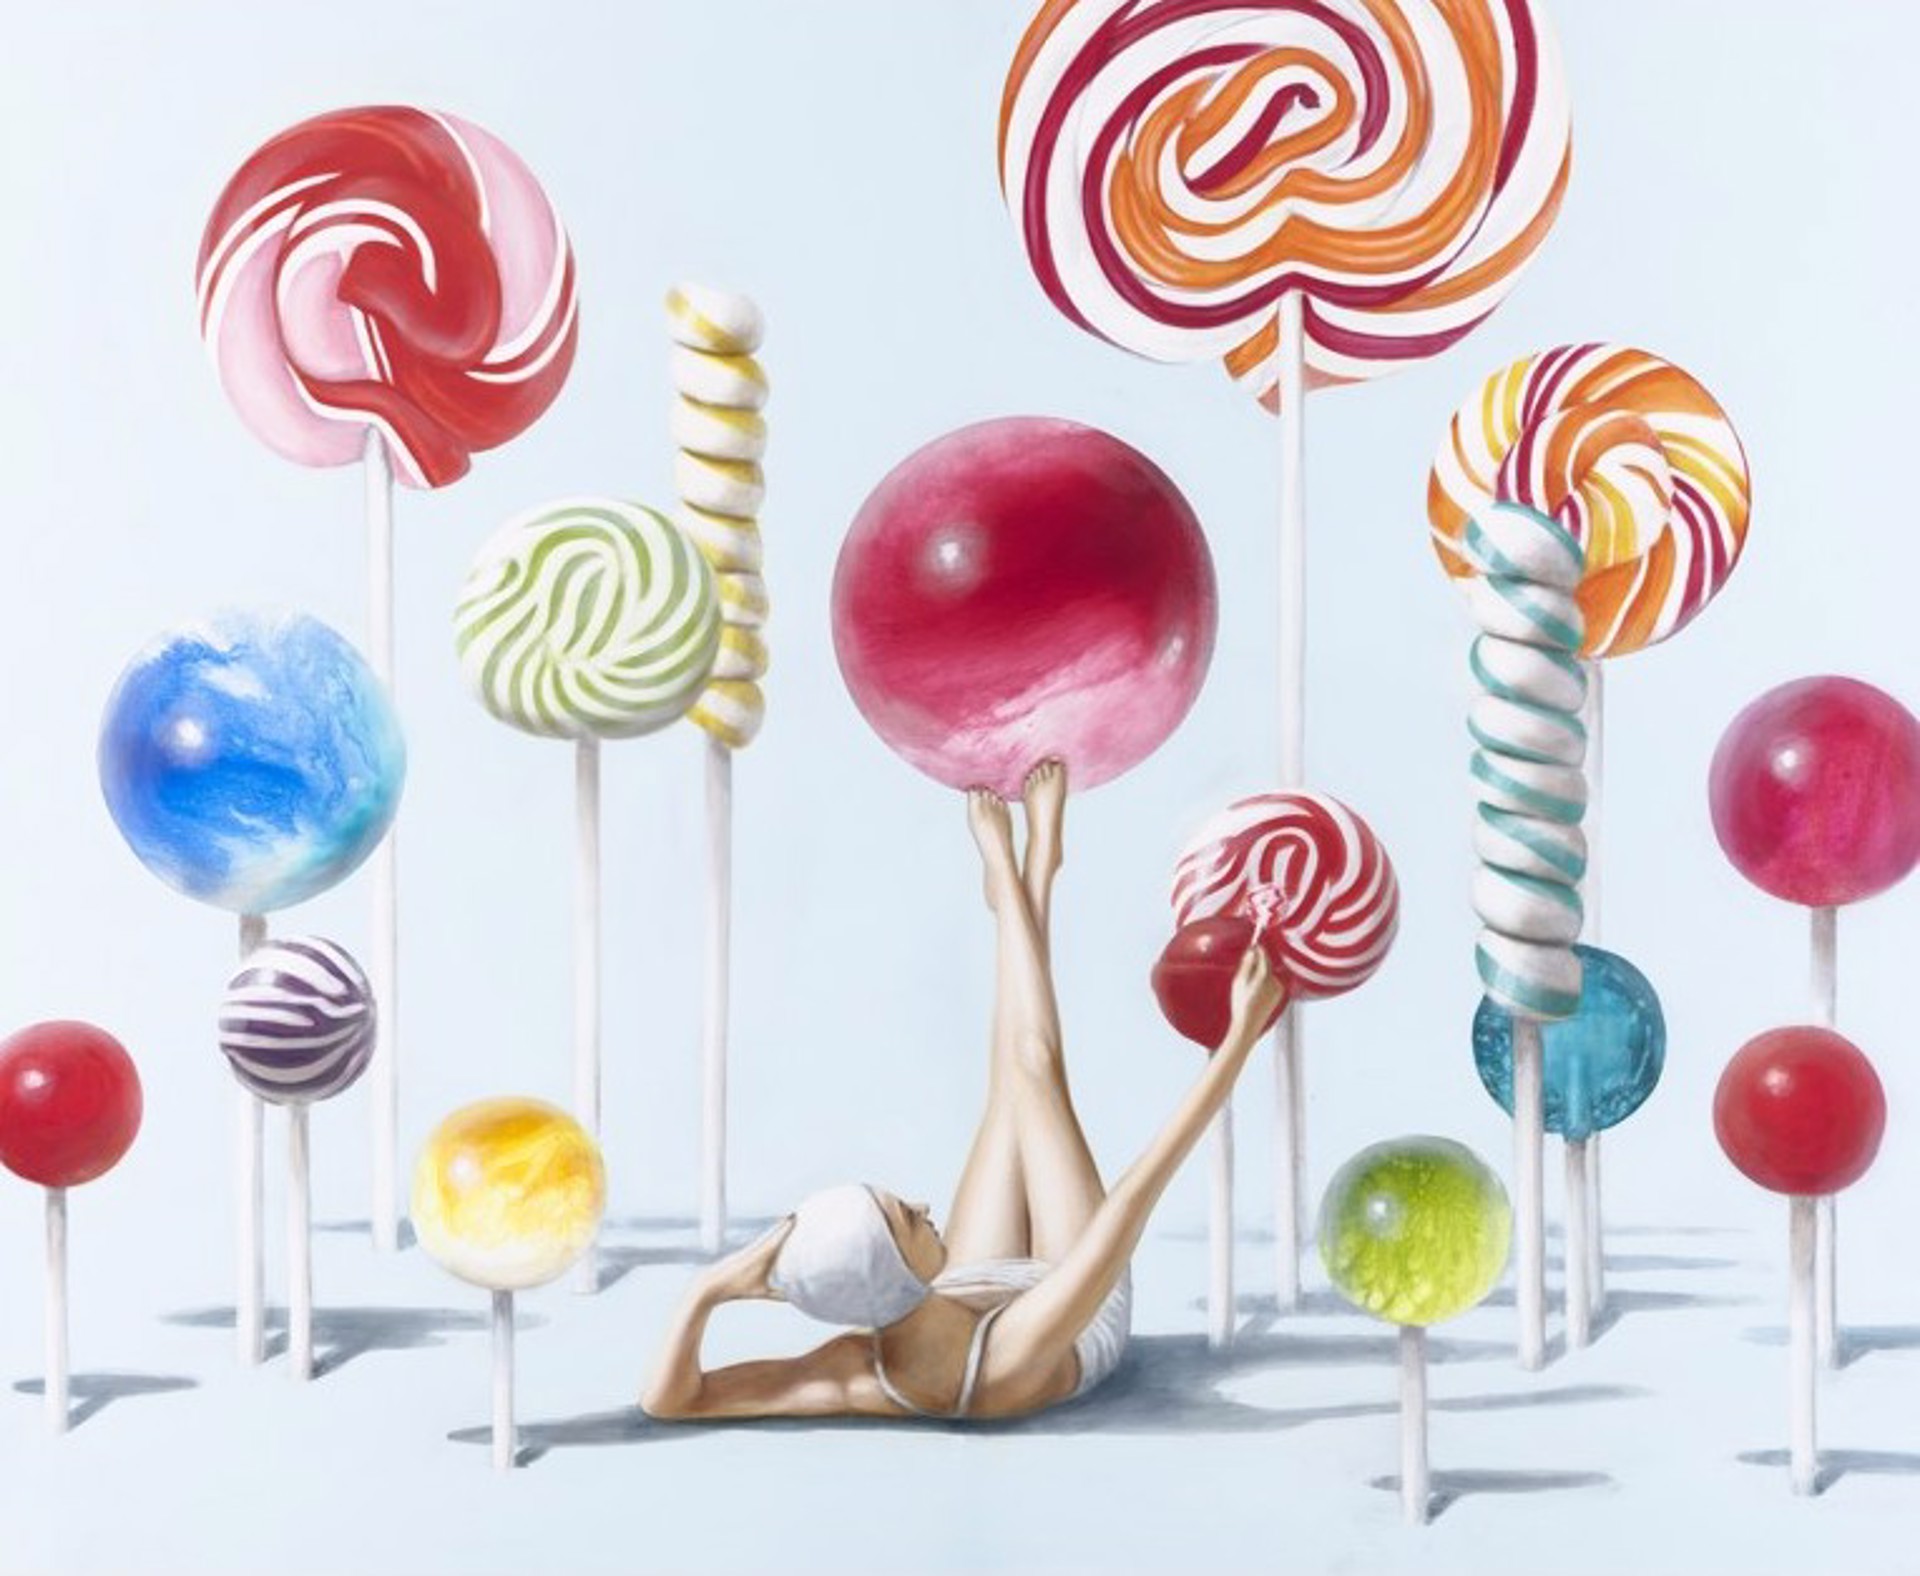 Lollipop by Elise Remender